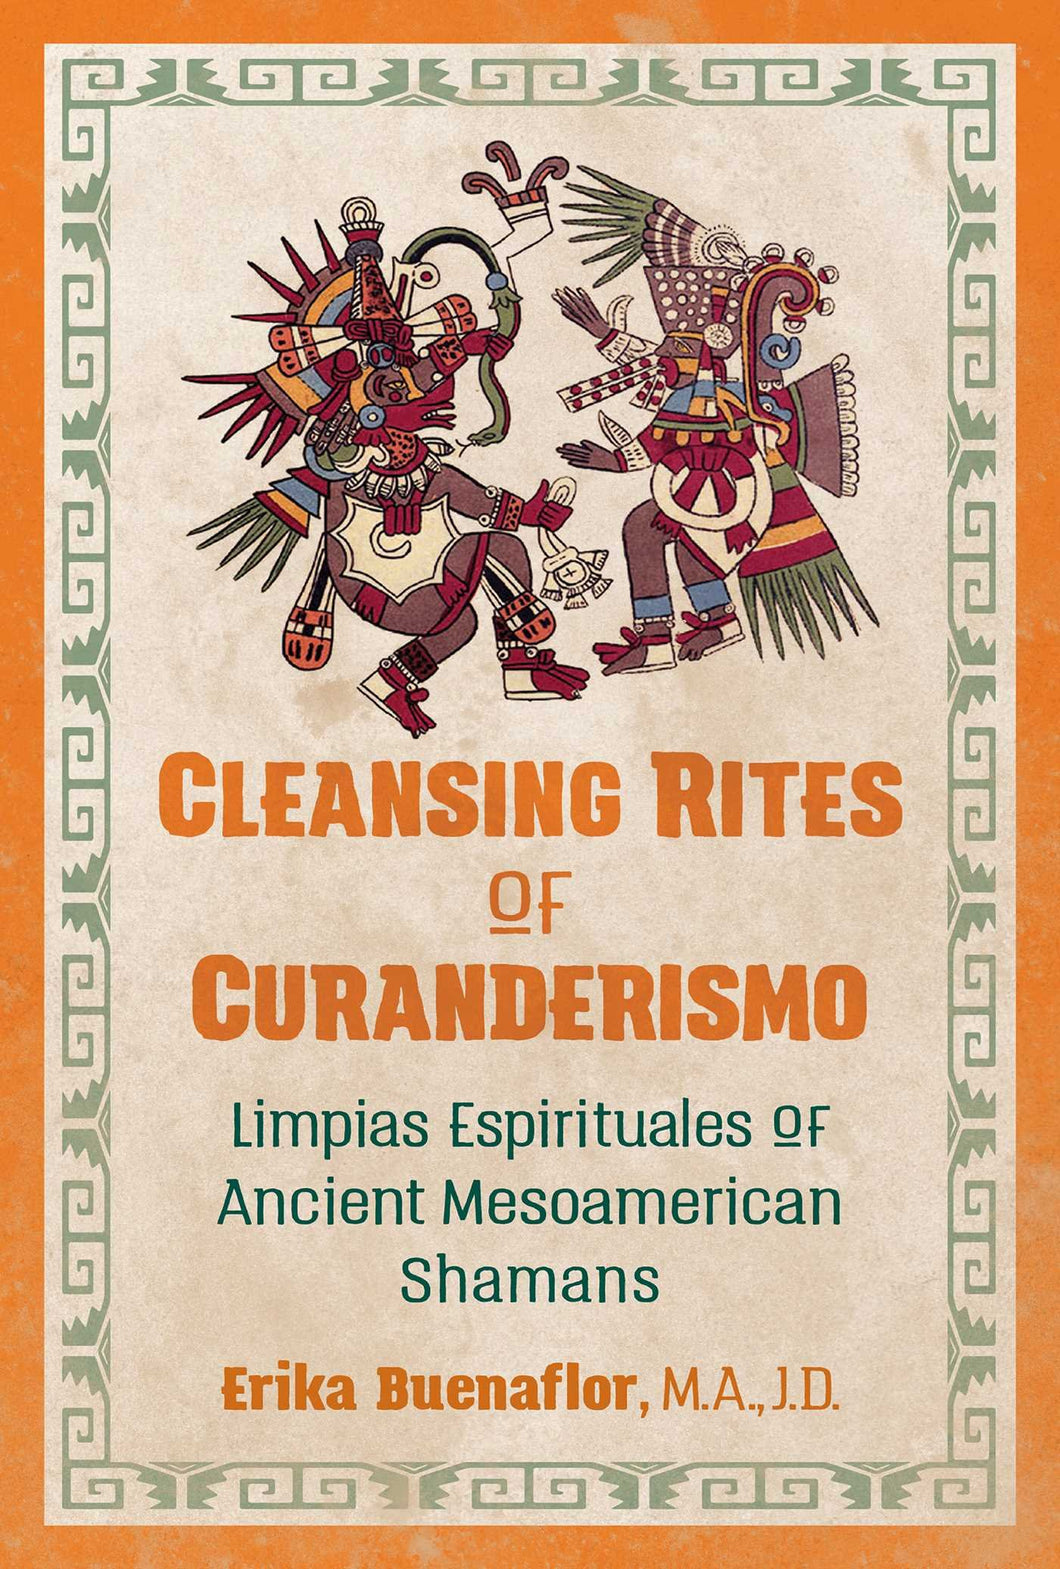 Cleansing Rites of Curanderismo: Limpias Espirituales of Ancient Mesoamerican Shamans by Erika Buenaflor